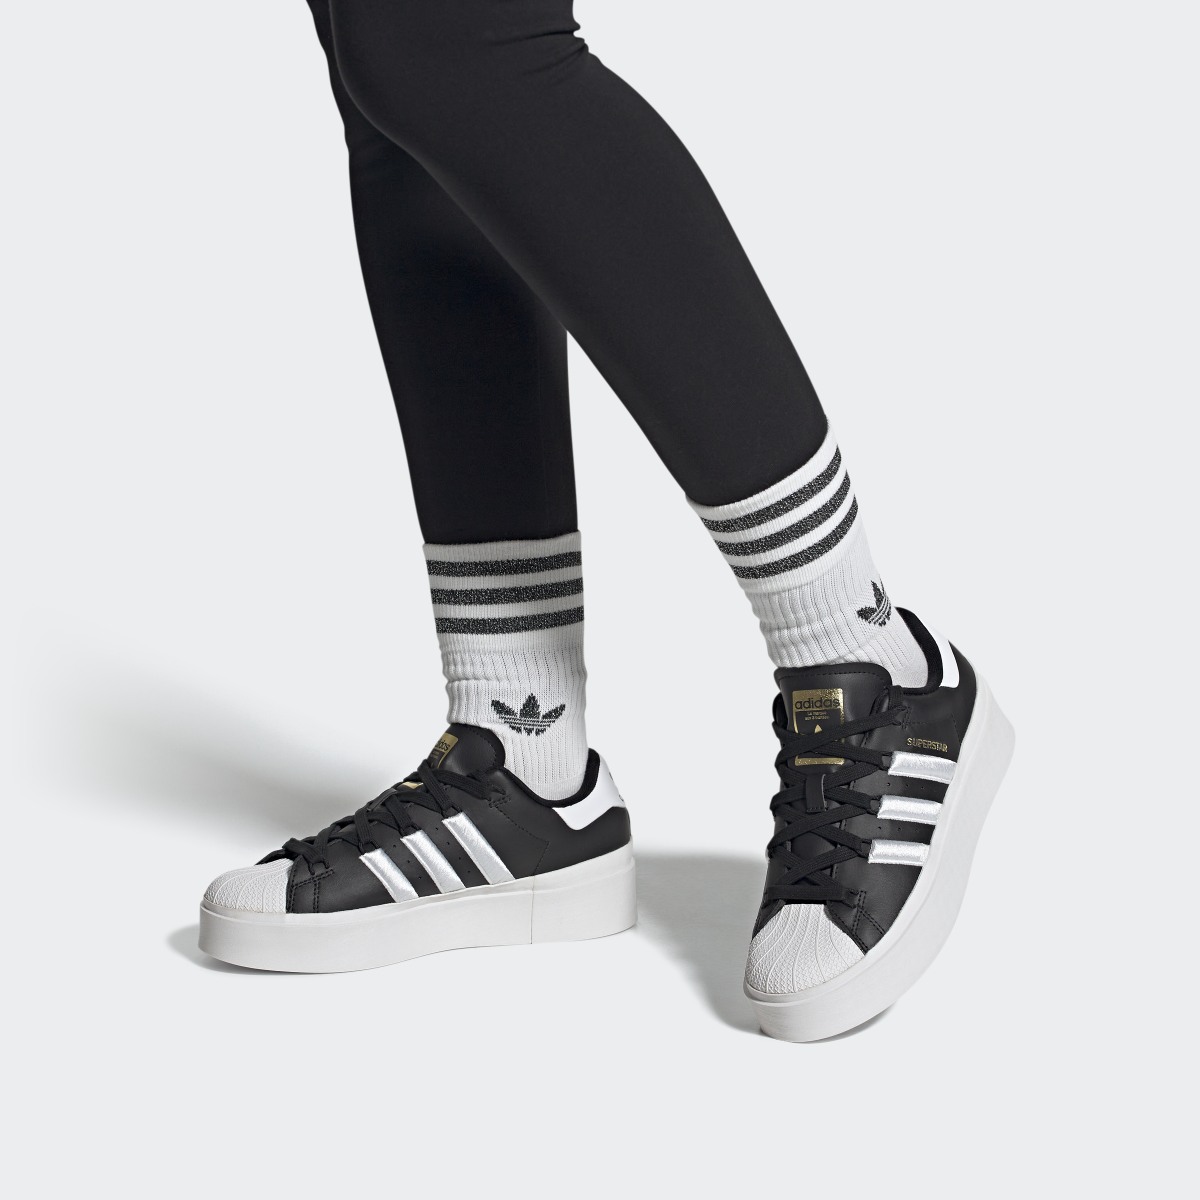 Adidas Superstar Bonega Shoes. 5